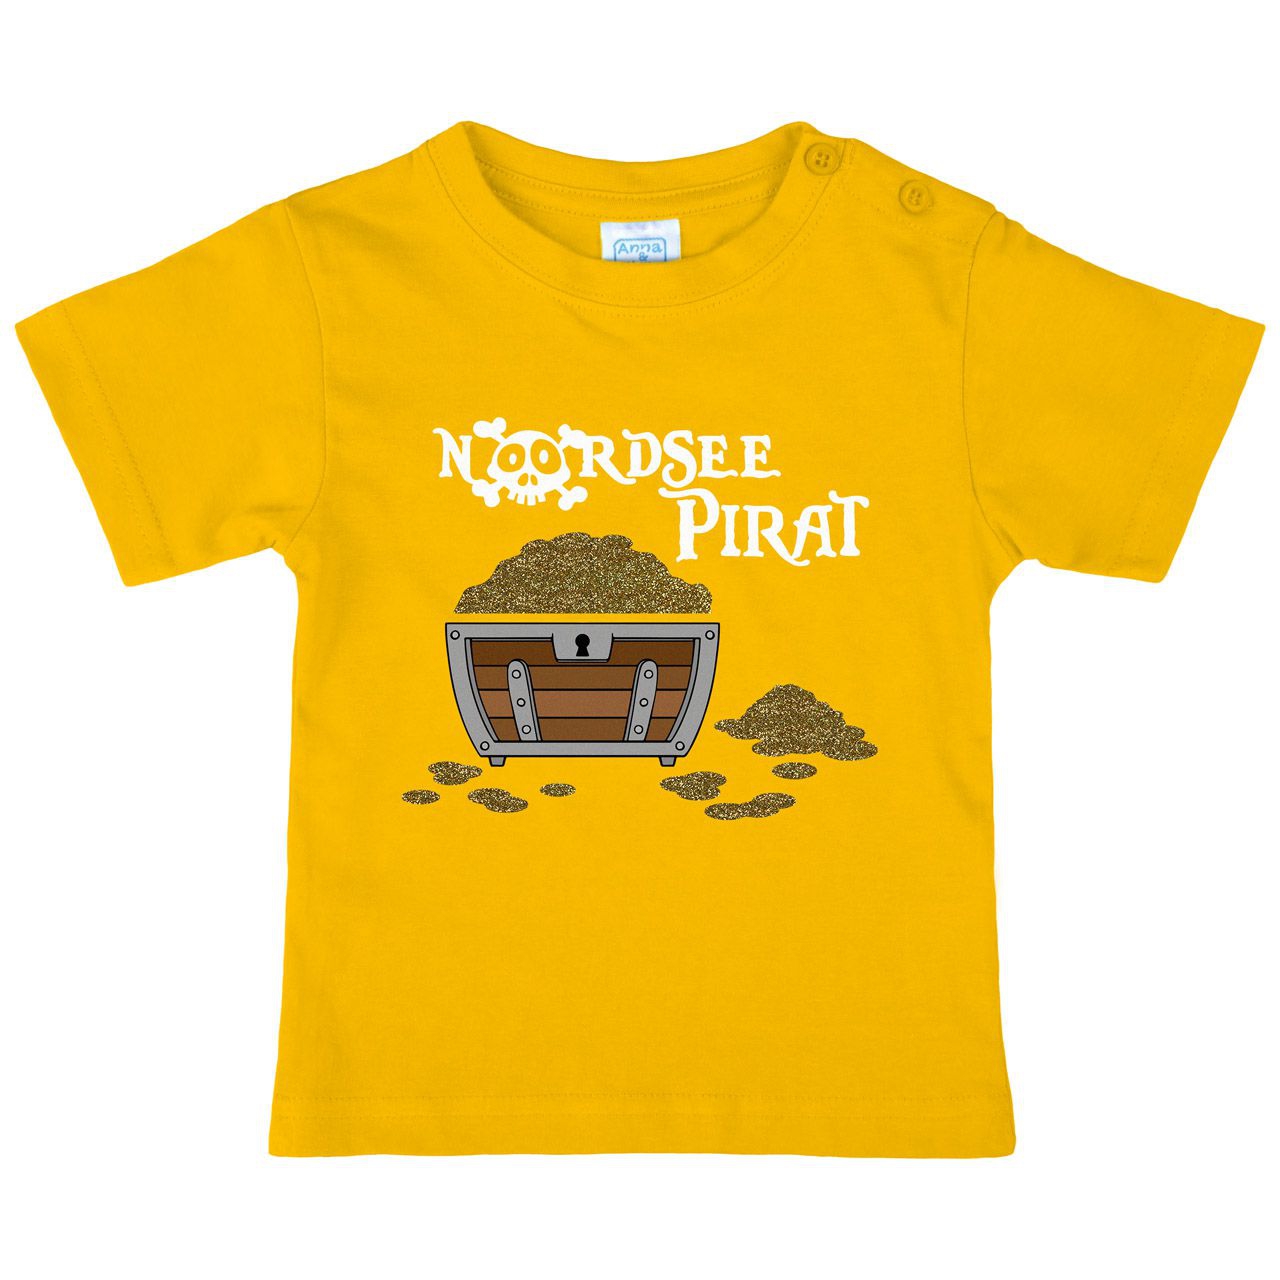 Nordsee Pirat Truhe Gold Glitzer Kinder T-Shirt gelb 110 / 116